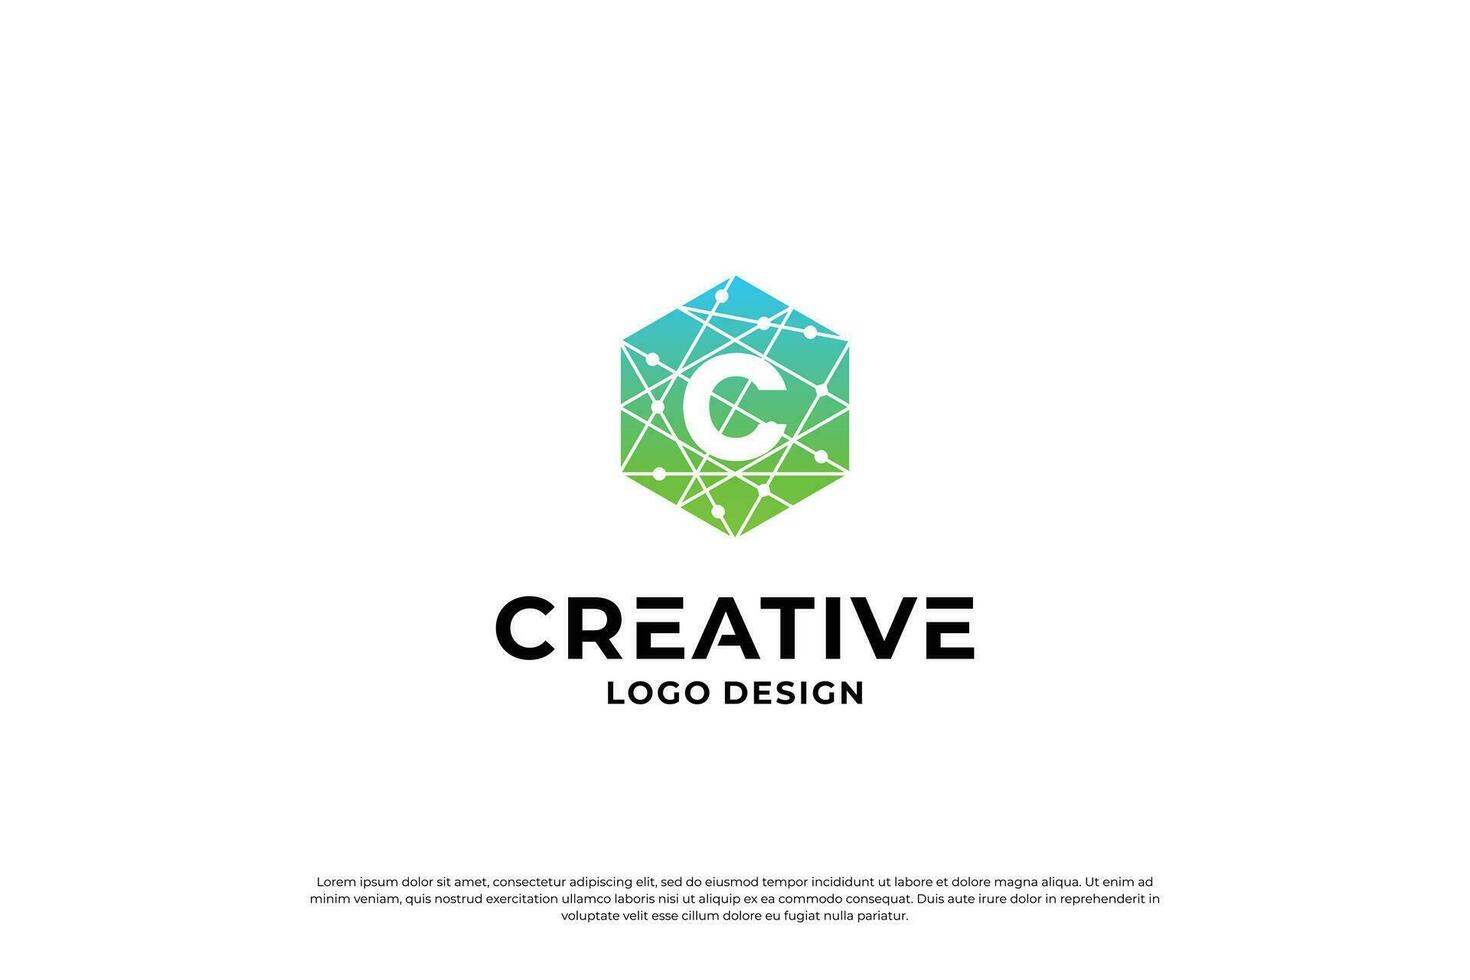 Brief c Logo Design Vorlage. kreativ Initiale Briefe c Logo Design Symbol. vektor